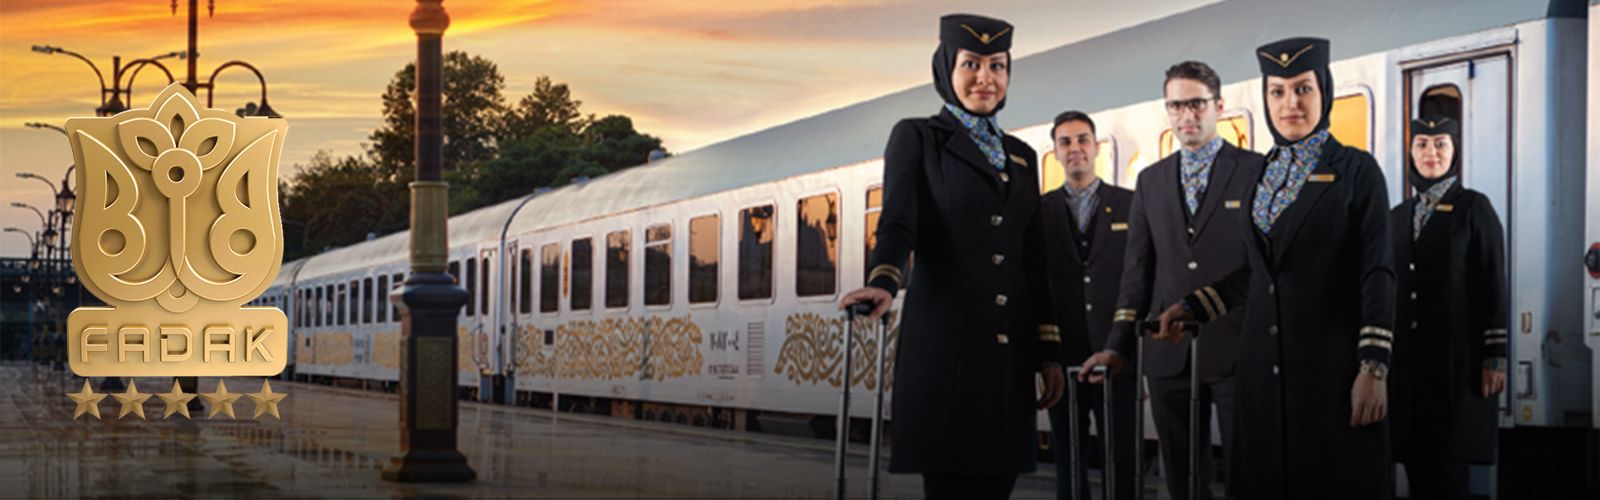 Fadak Train | Iransafar Train Tours 2019 